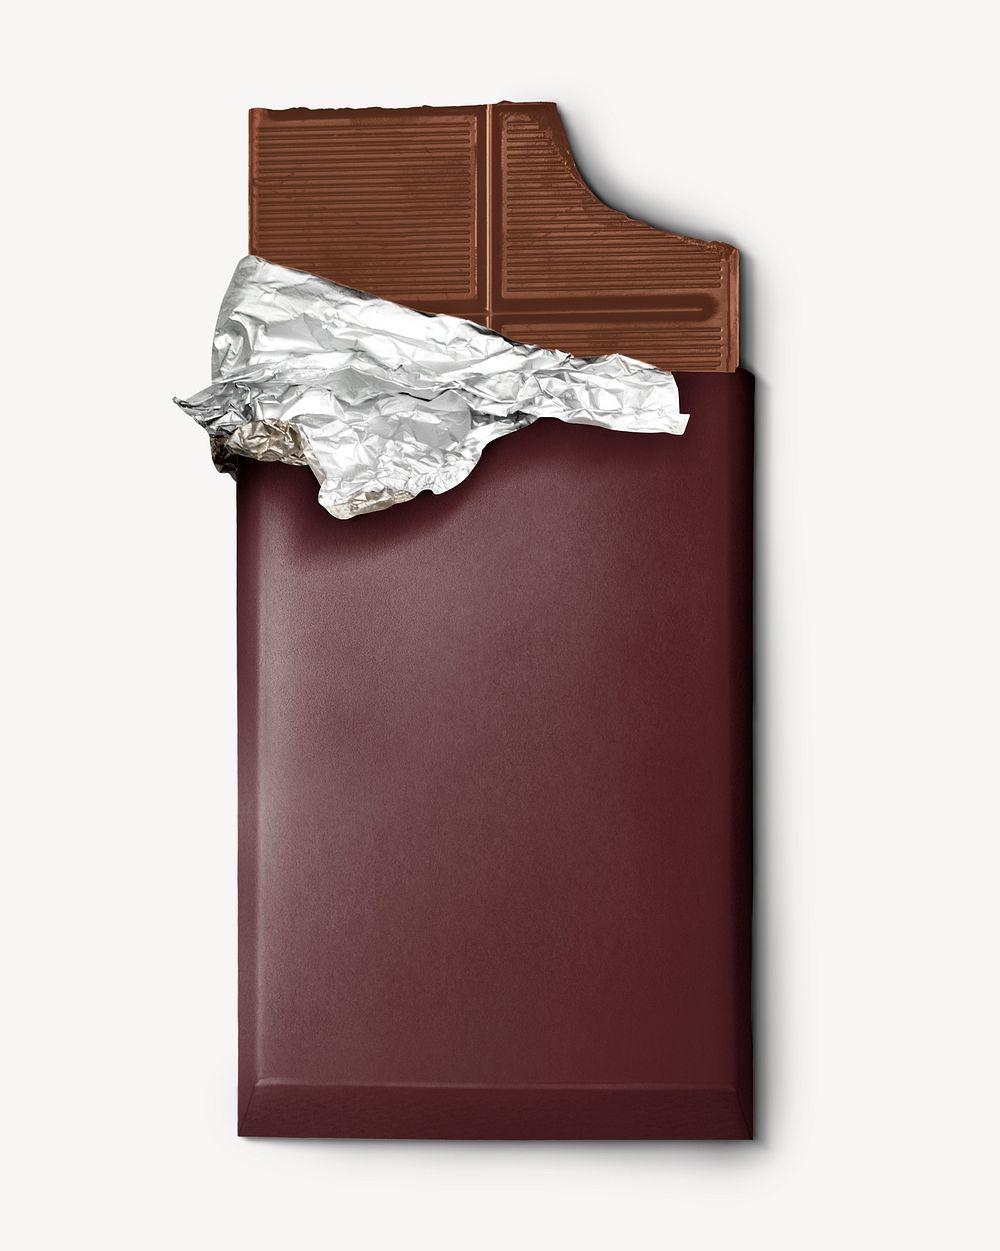 Chocolate bar collage element image